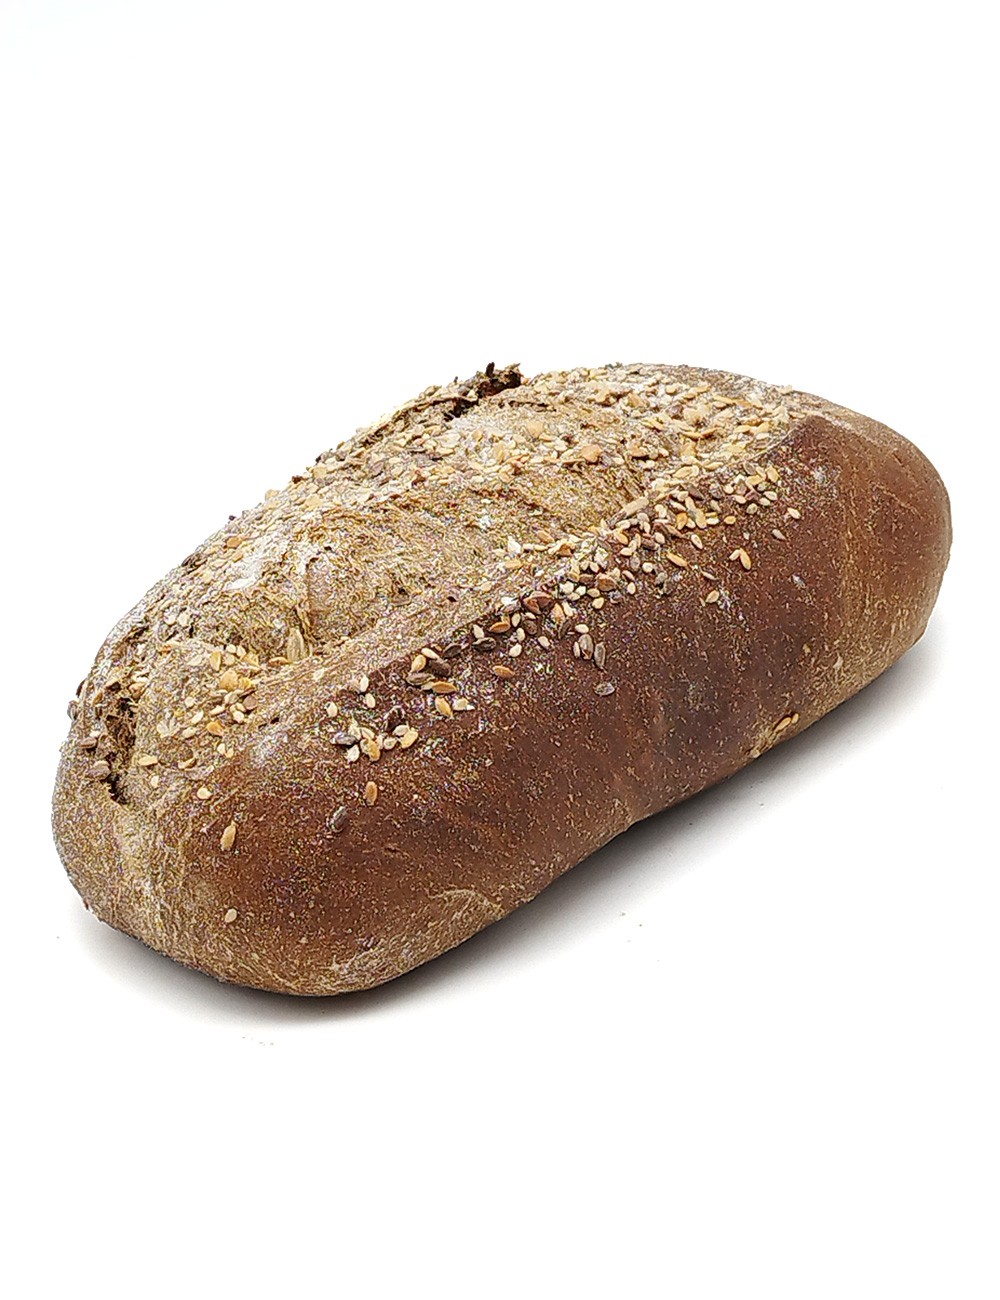 Pan de malta